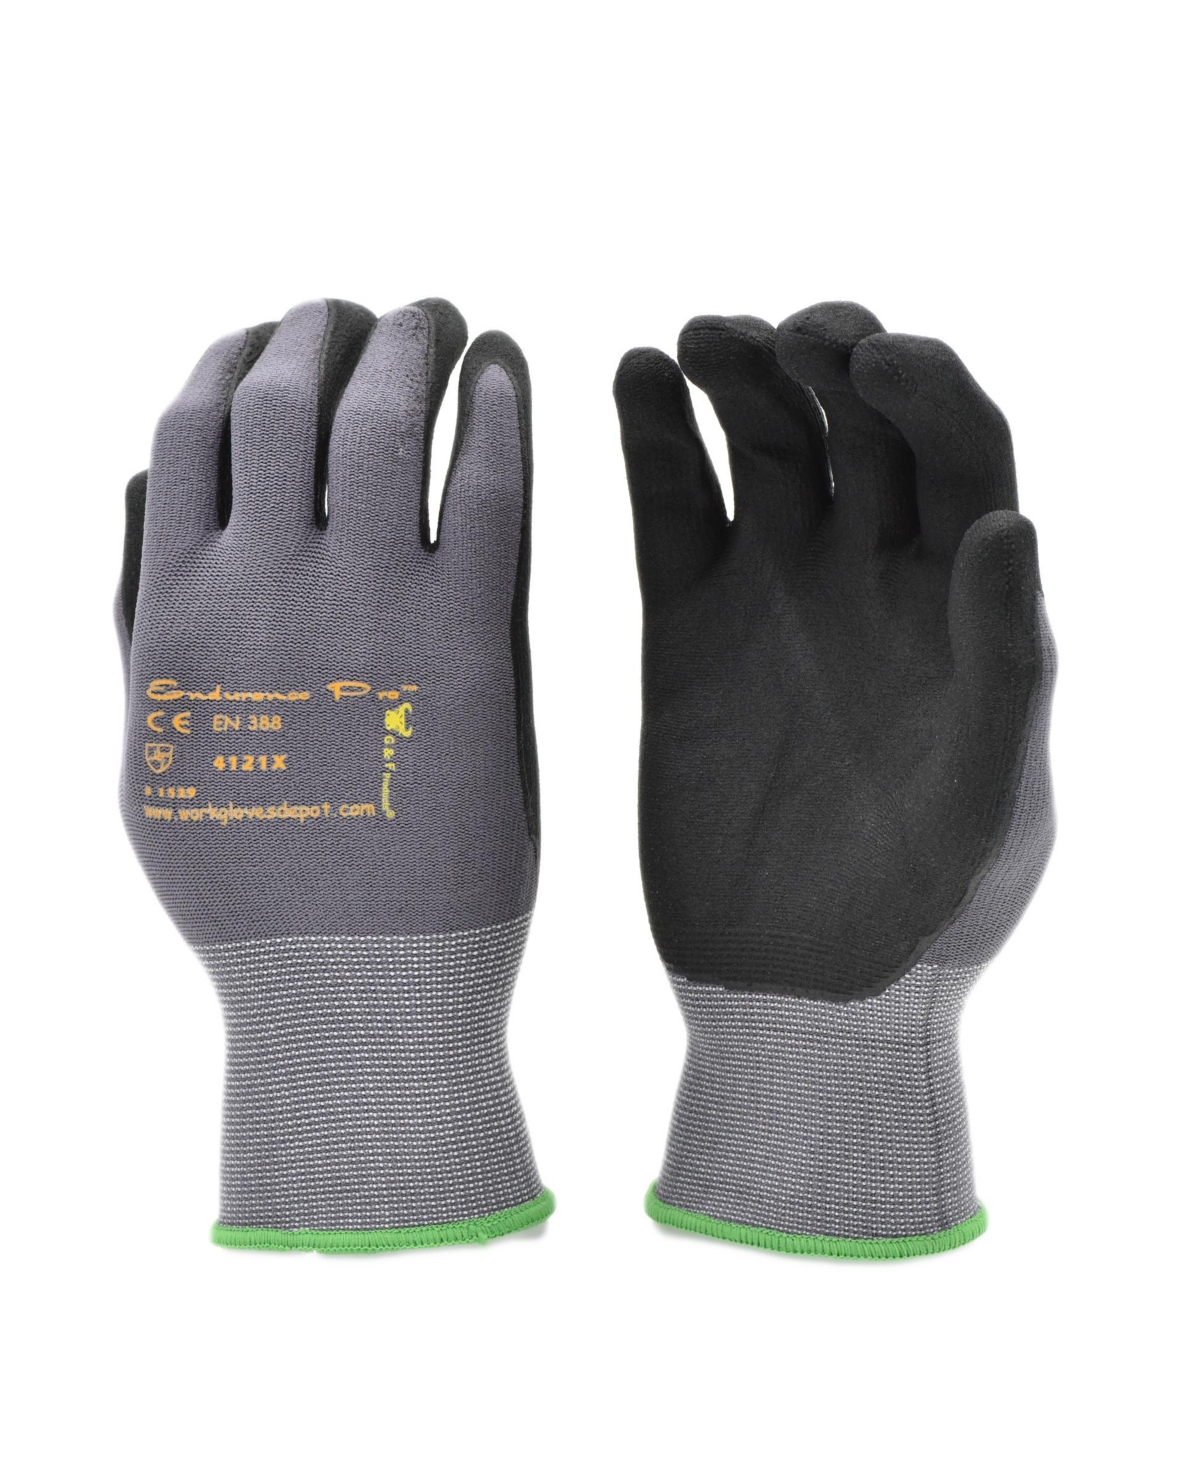 Seamless Knit Nylon Gloves, 12 Pairs - Black